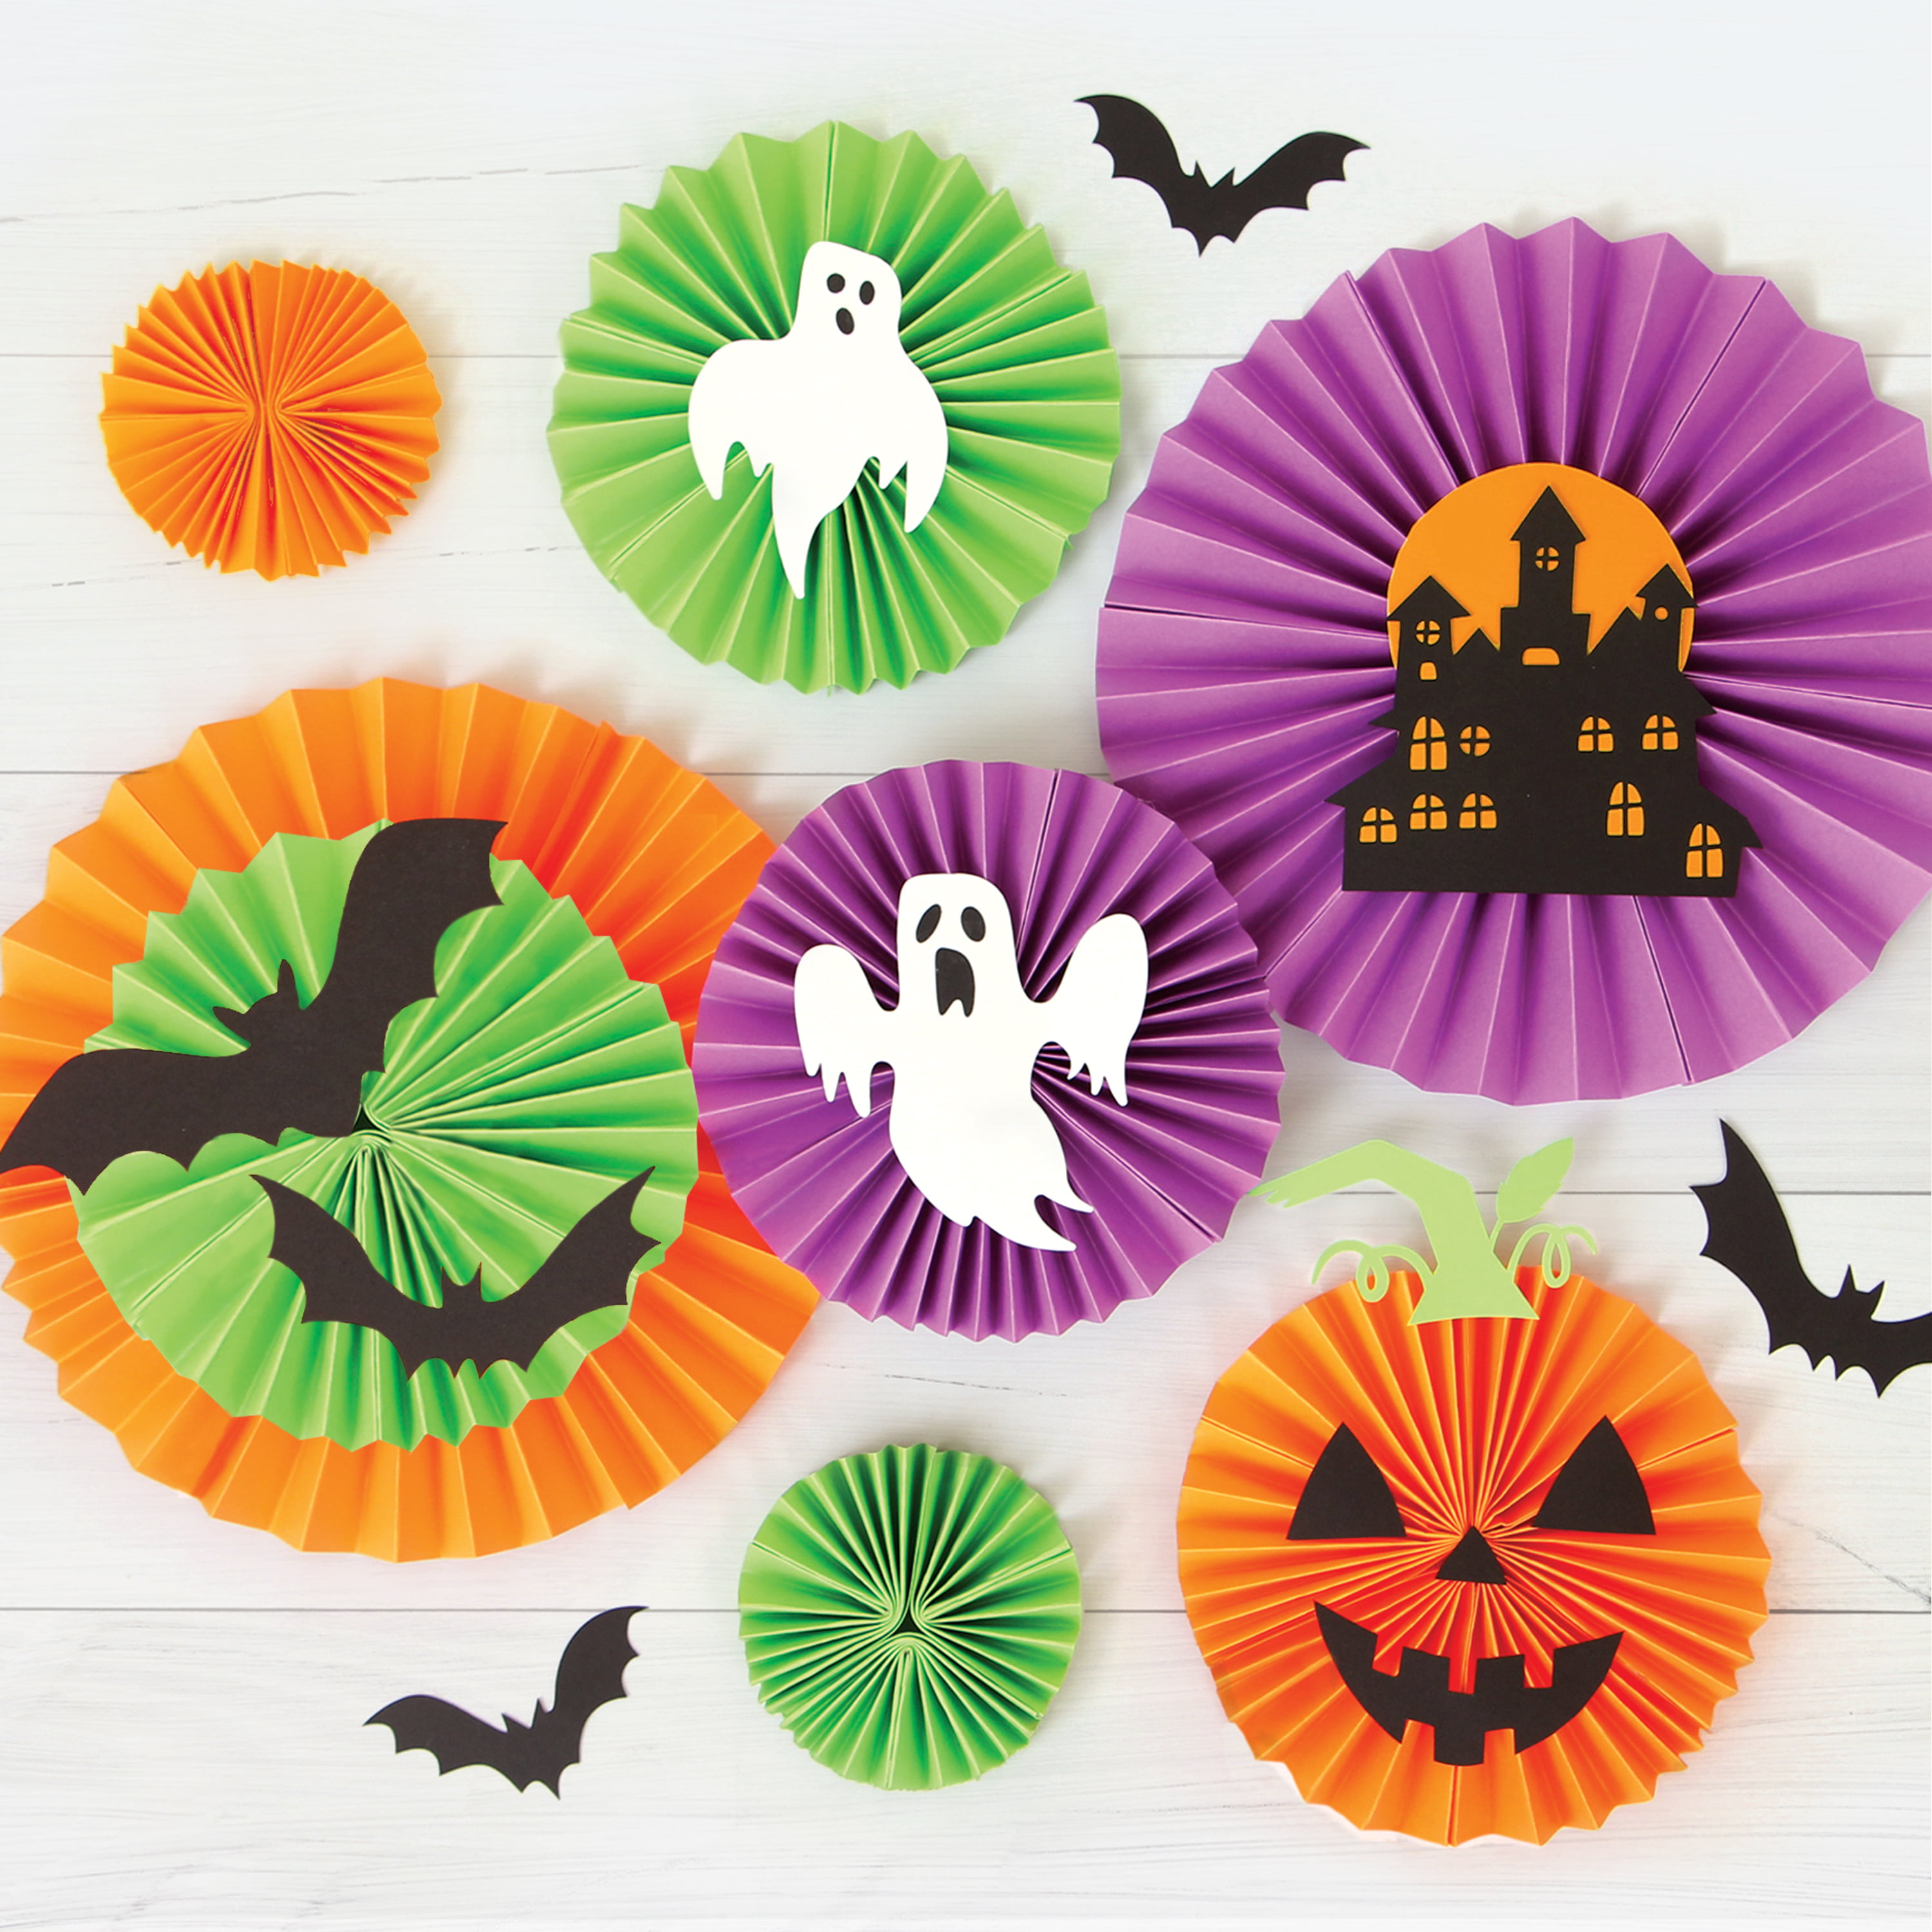  Kosiz 200 Sheets Halloween Colored Cardstock 8.5 x 11